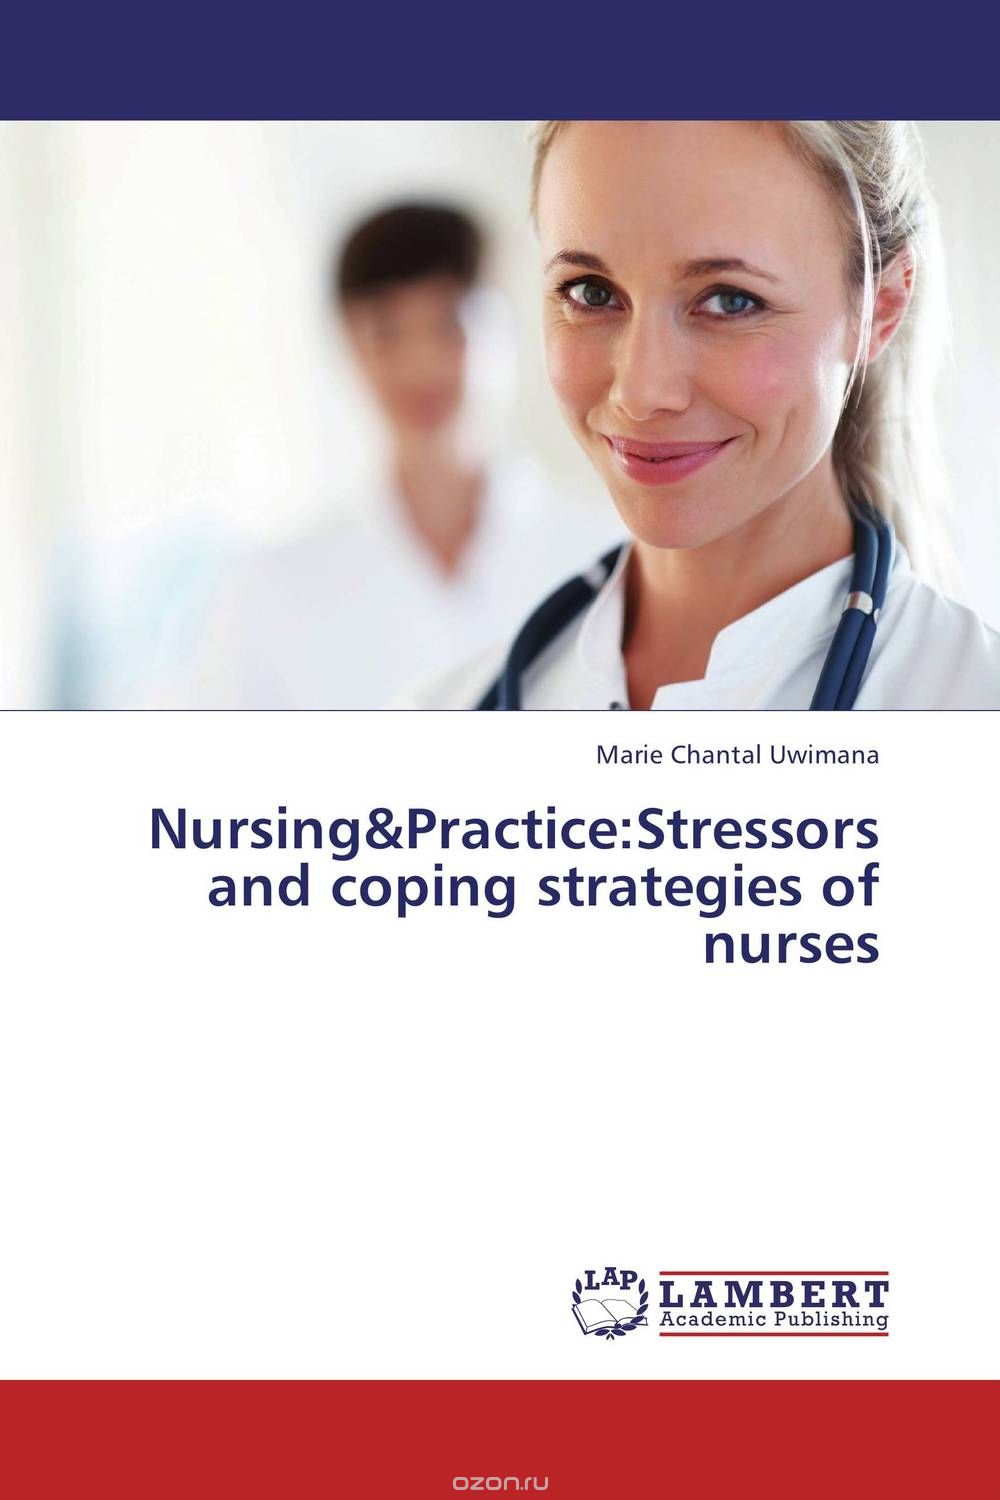 Скачать книгу "Nursing&Practice:Stressors and coping strategies of nurses"